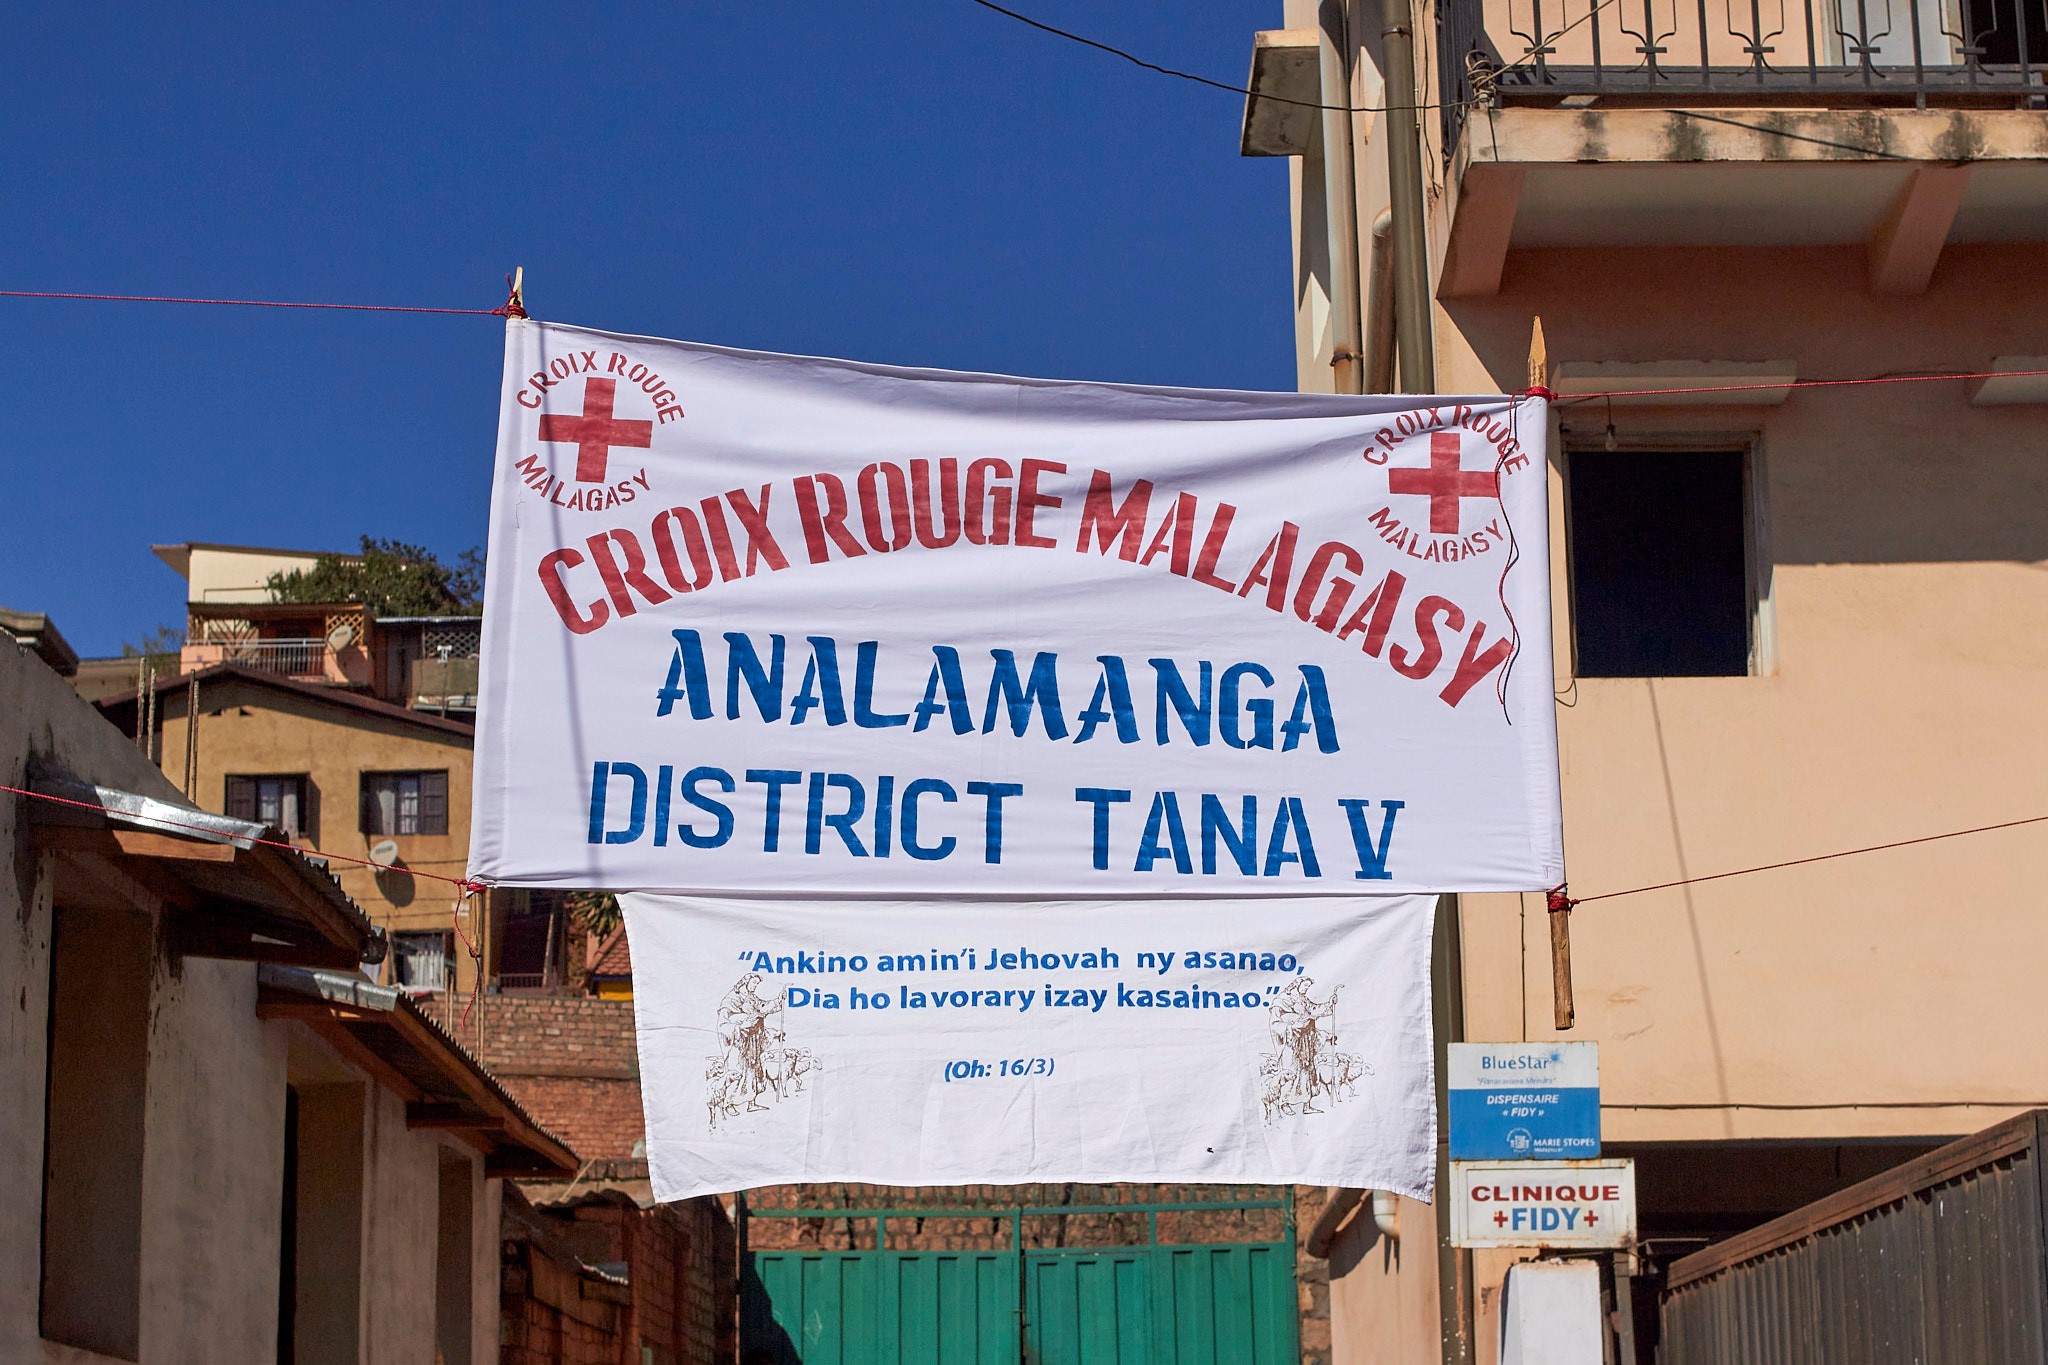 Croix-Rouge Malagasy Faritra Analamanga District Tana V